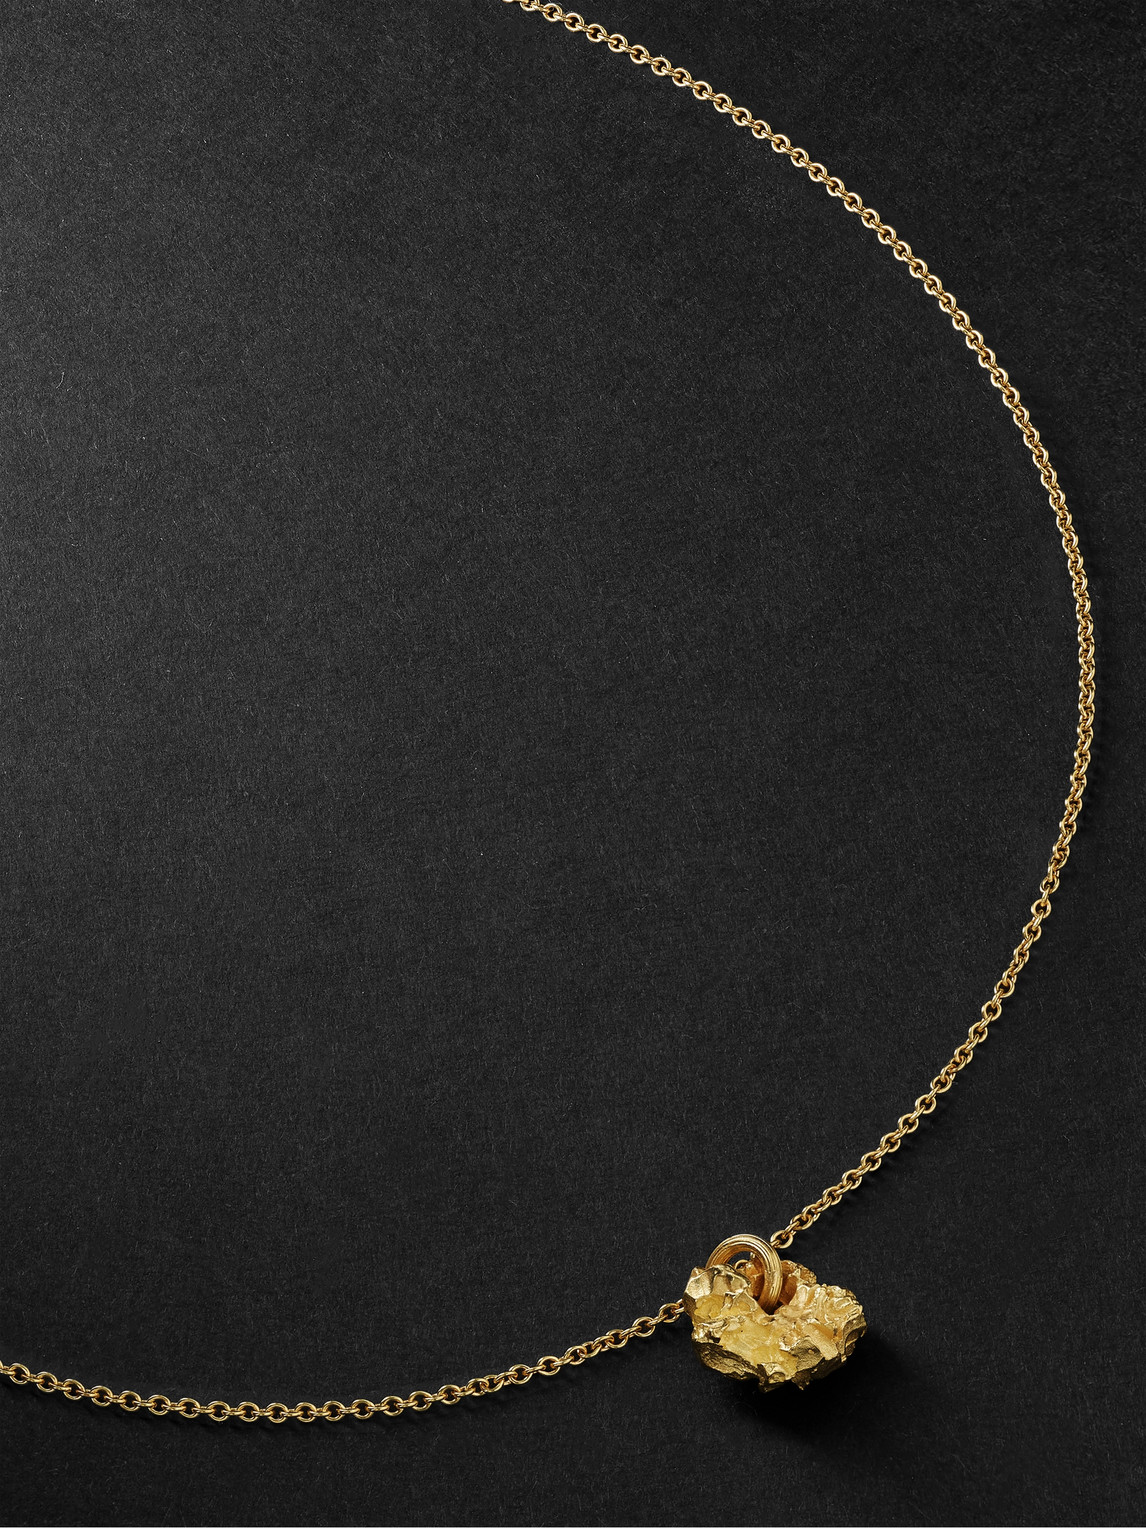 Elhanati Rock Small Gold Necklace